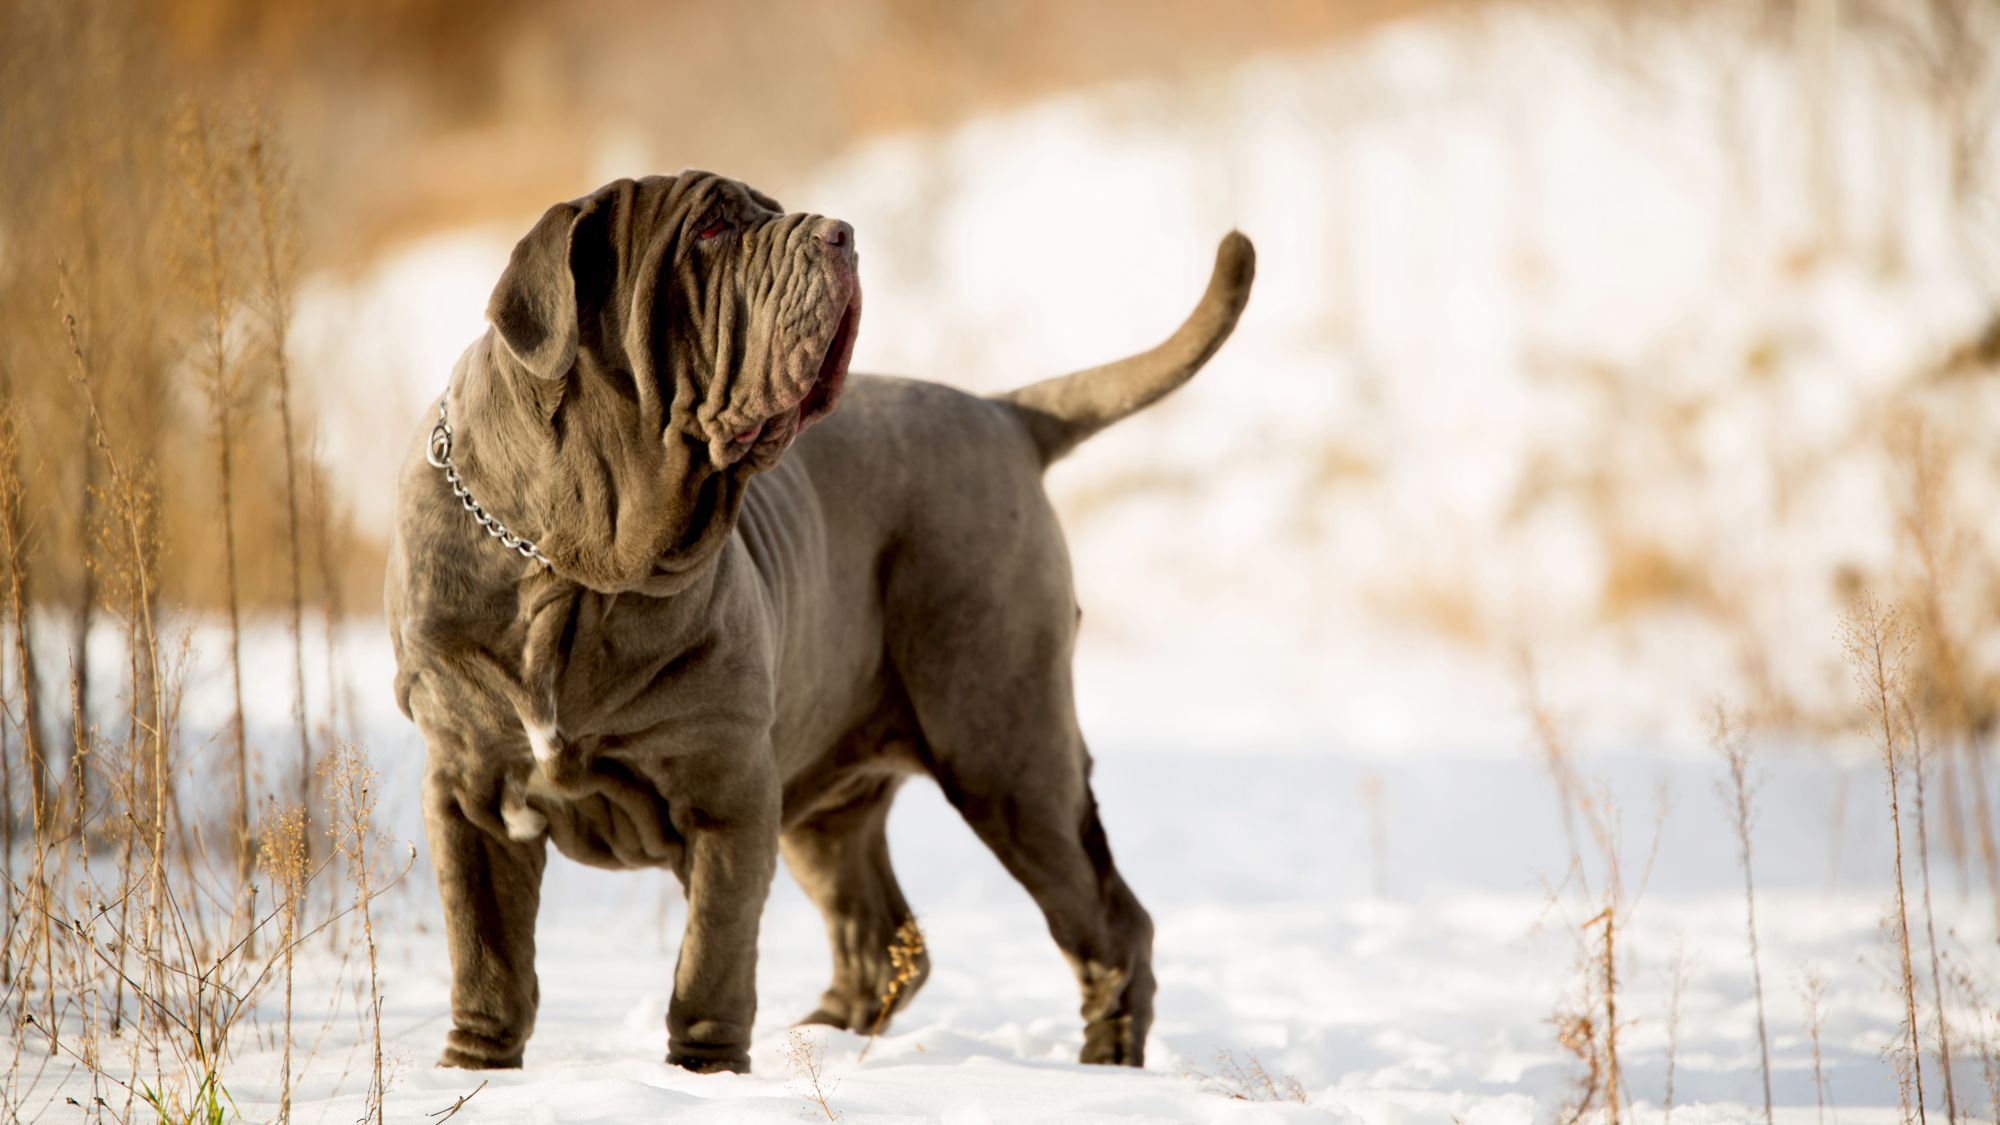 Neapolitan Mastiff standing in snow